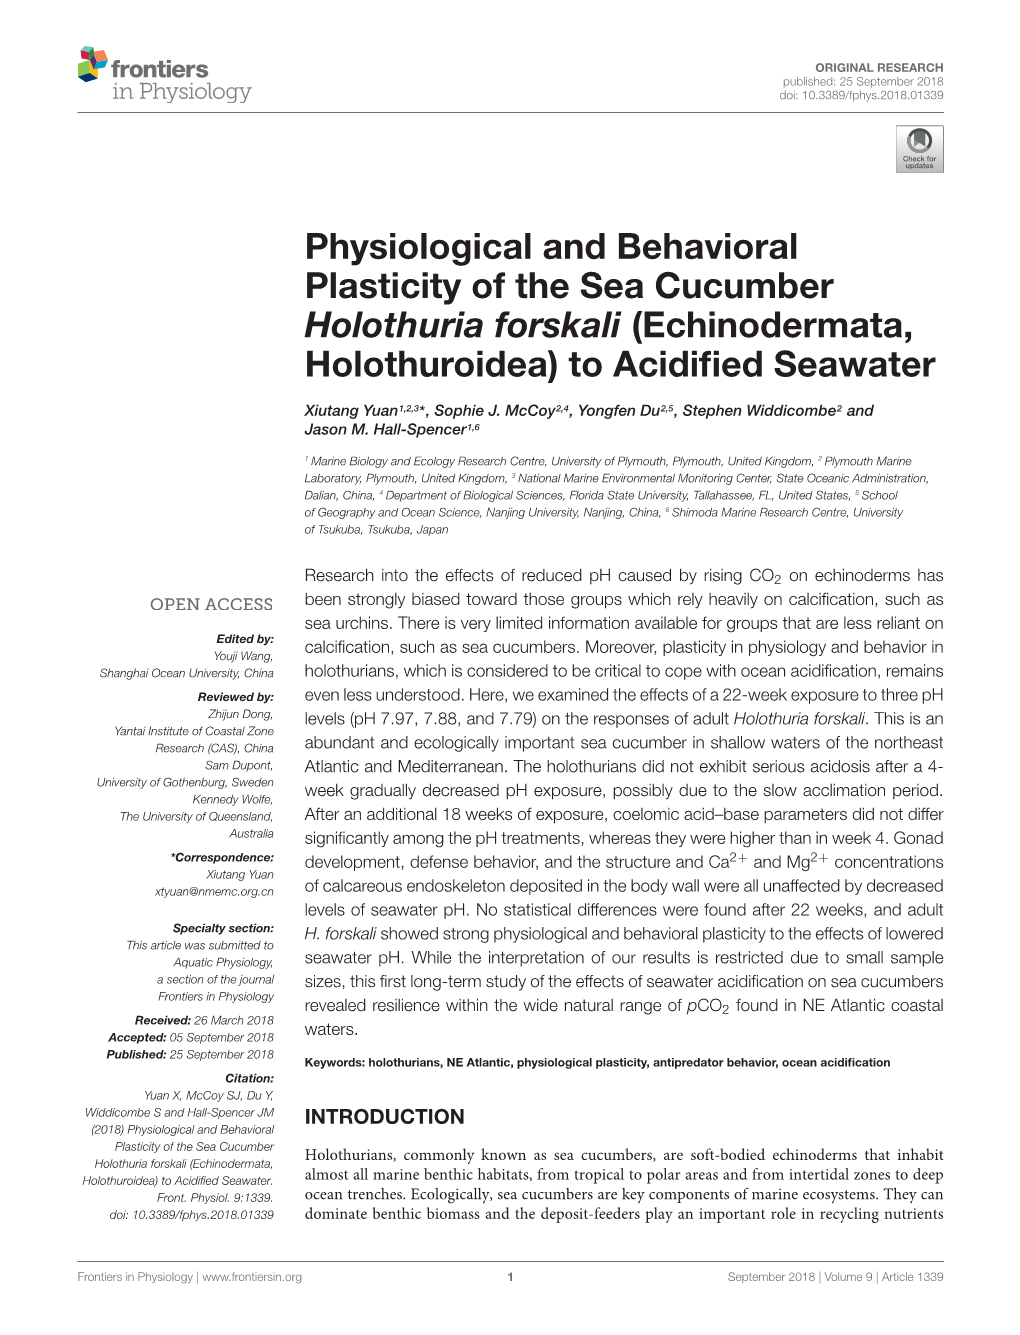 Physiological and Behavioral Plasticity of the Sea Cucumber Holothuria Forskali (Echinodermata, Holothuroidea) to Acidiﬁed Seawater